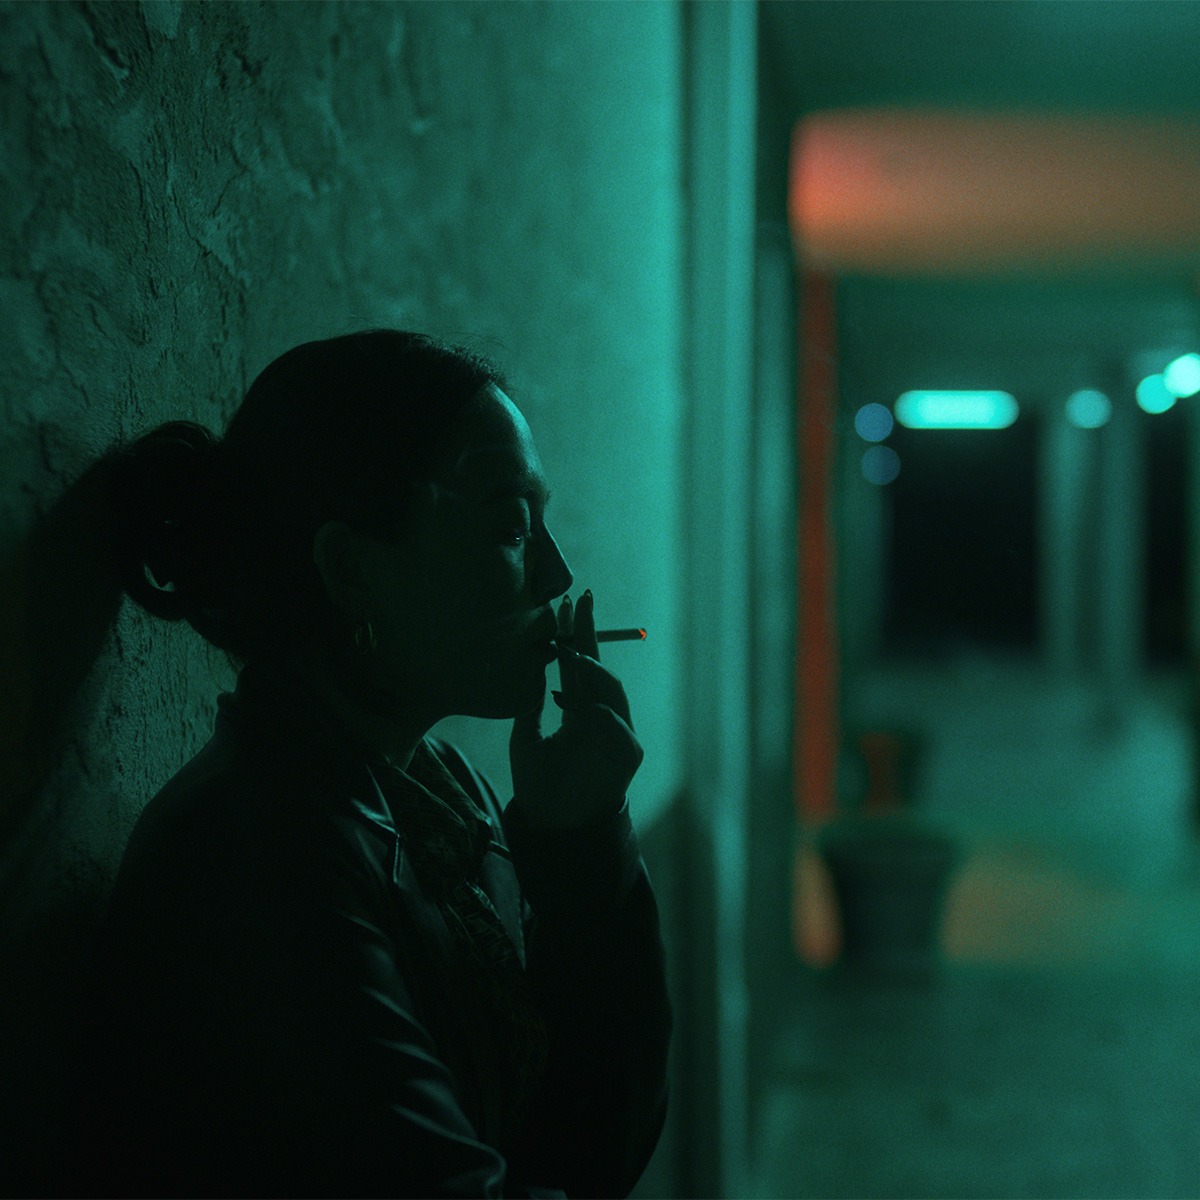 A woman smoking a cigarette at night.